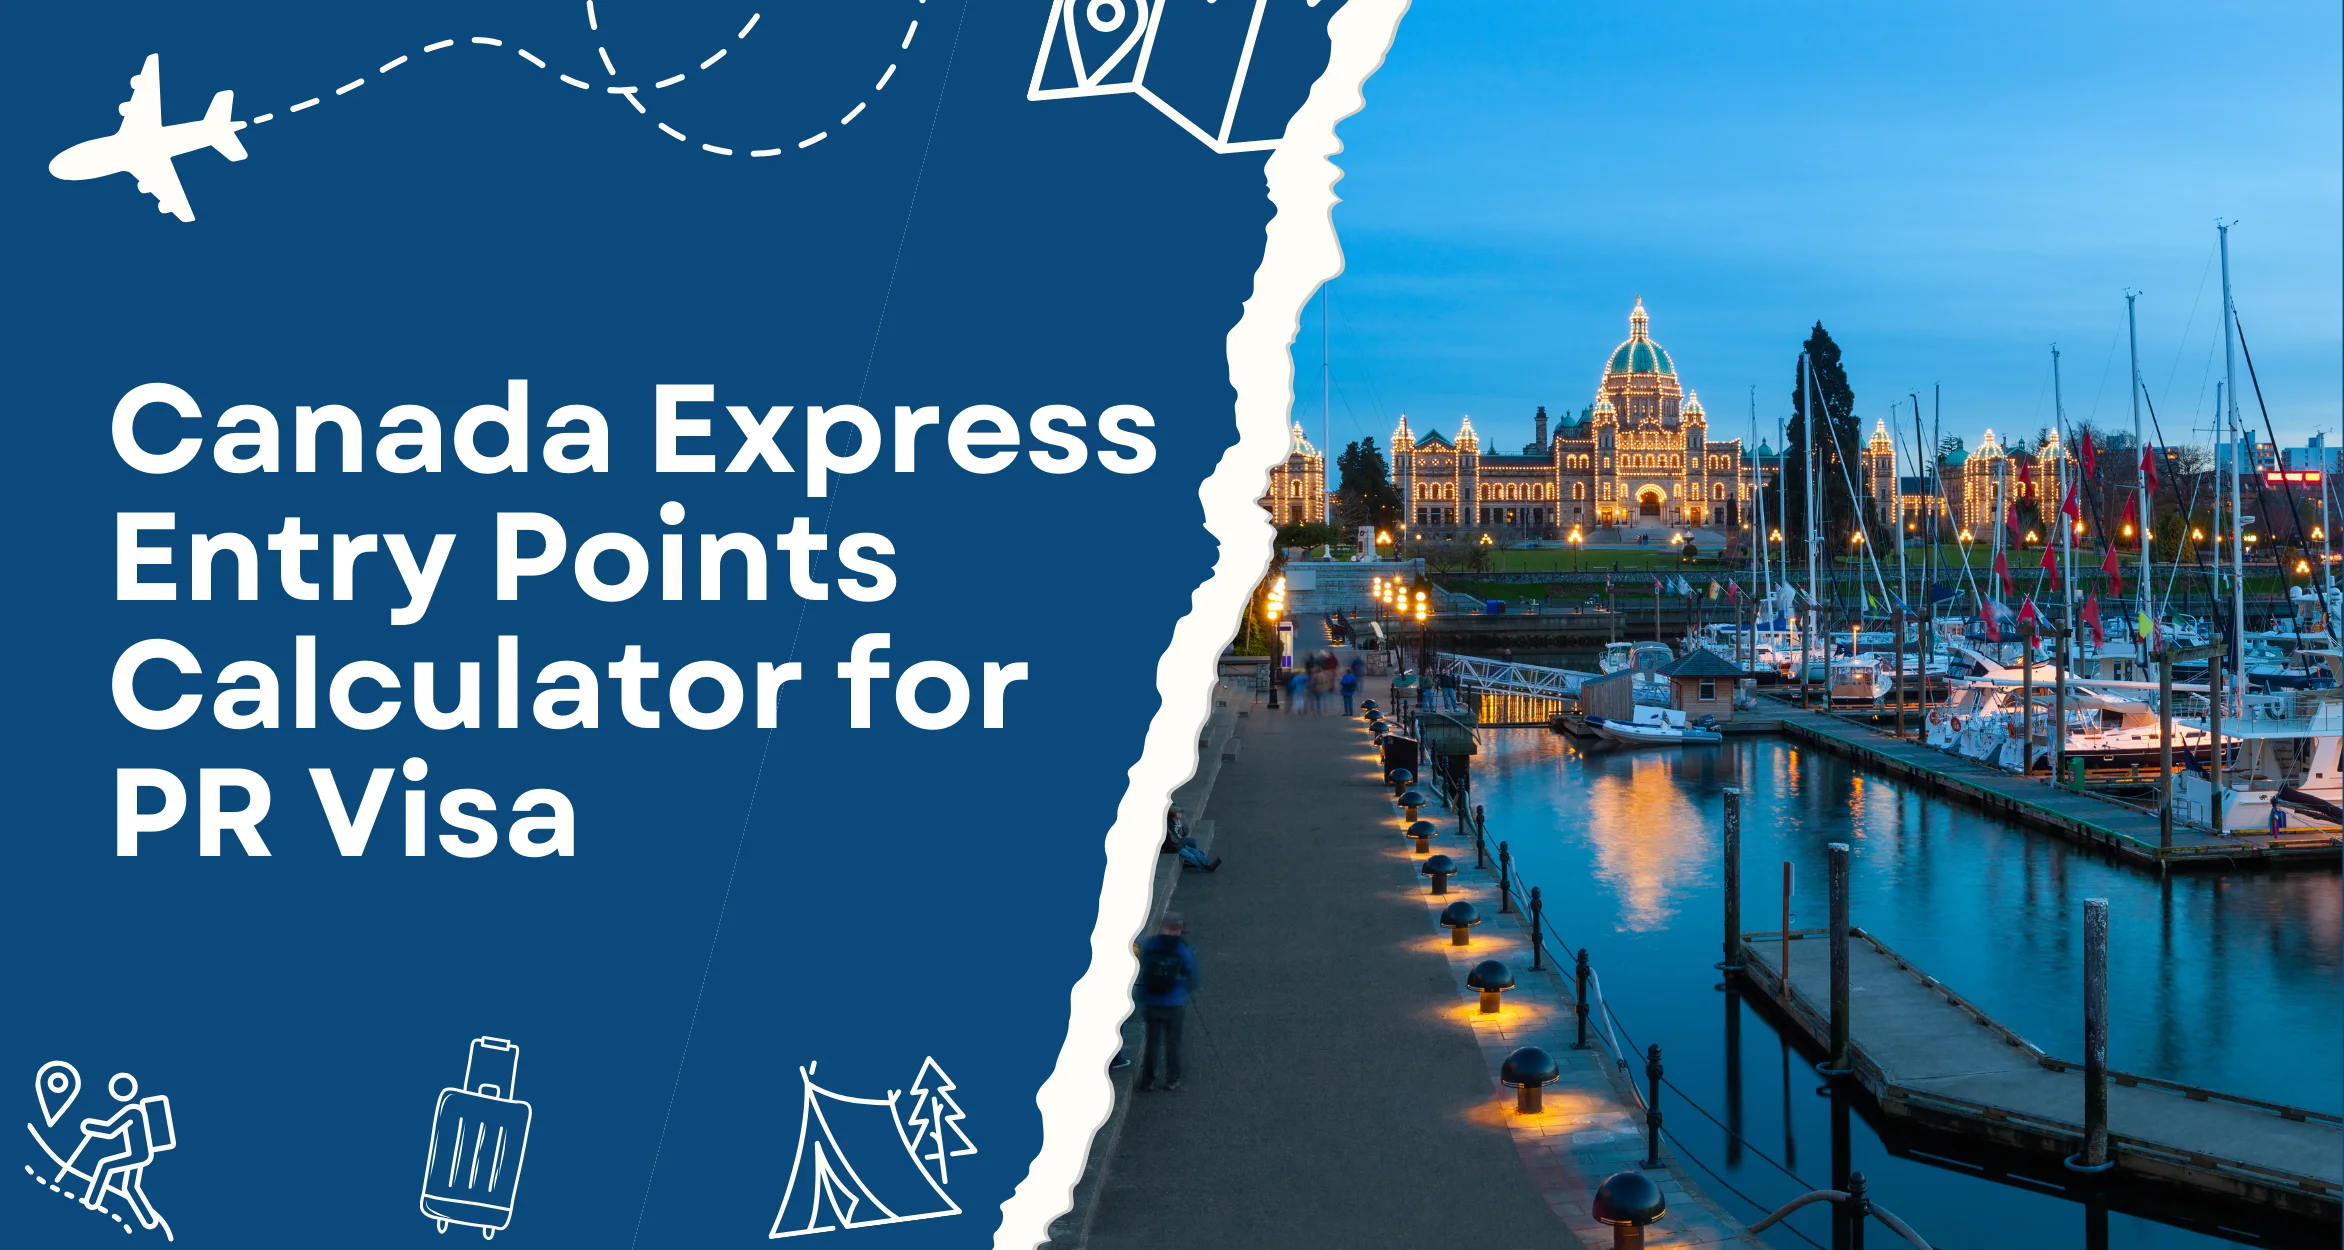 Canada Express Entry Points Calculator for PR Visa